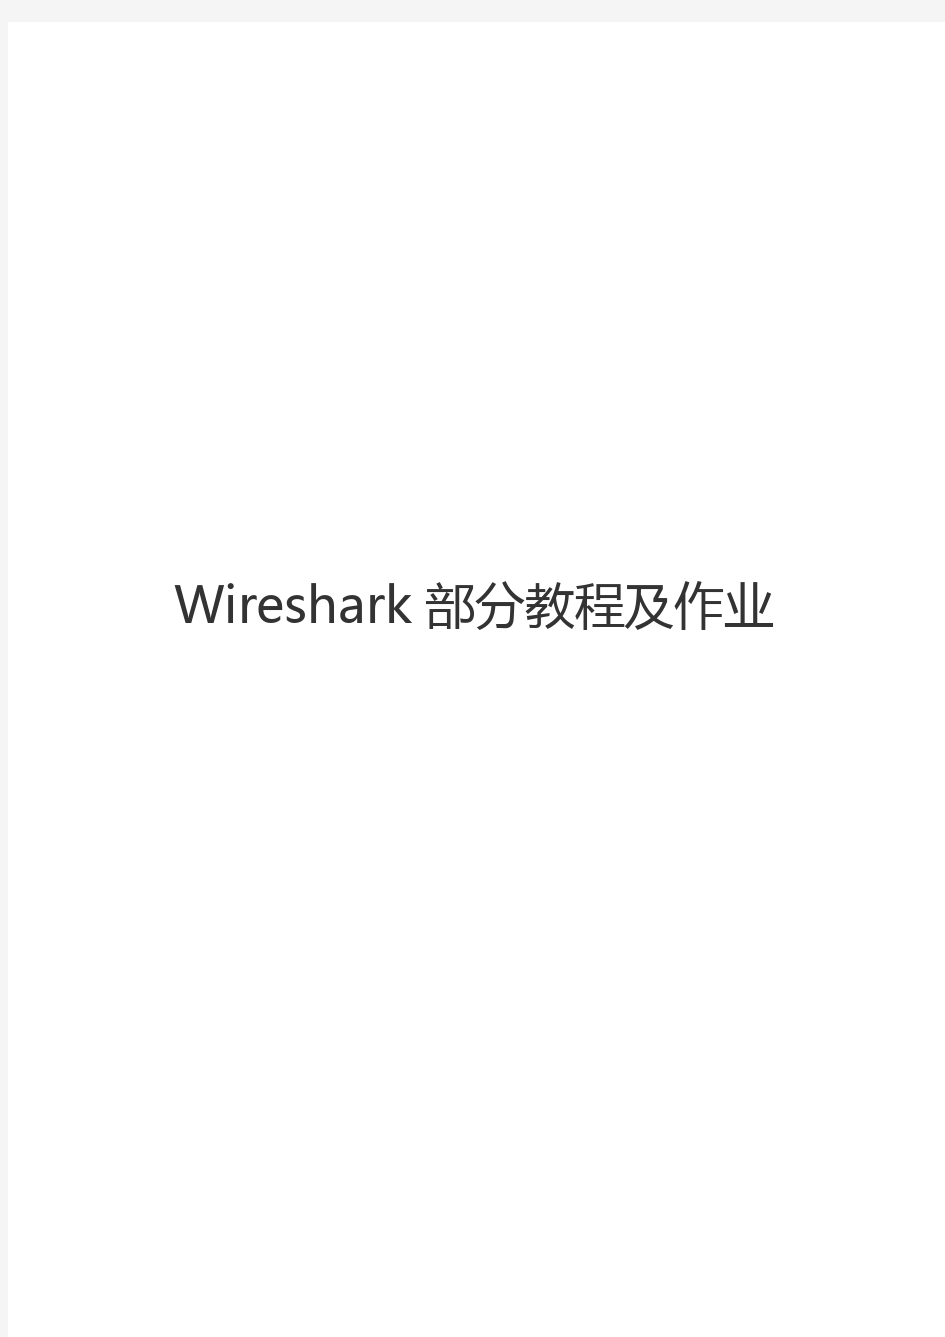 wireshark教程及作业